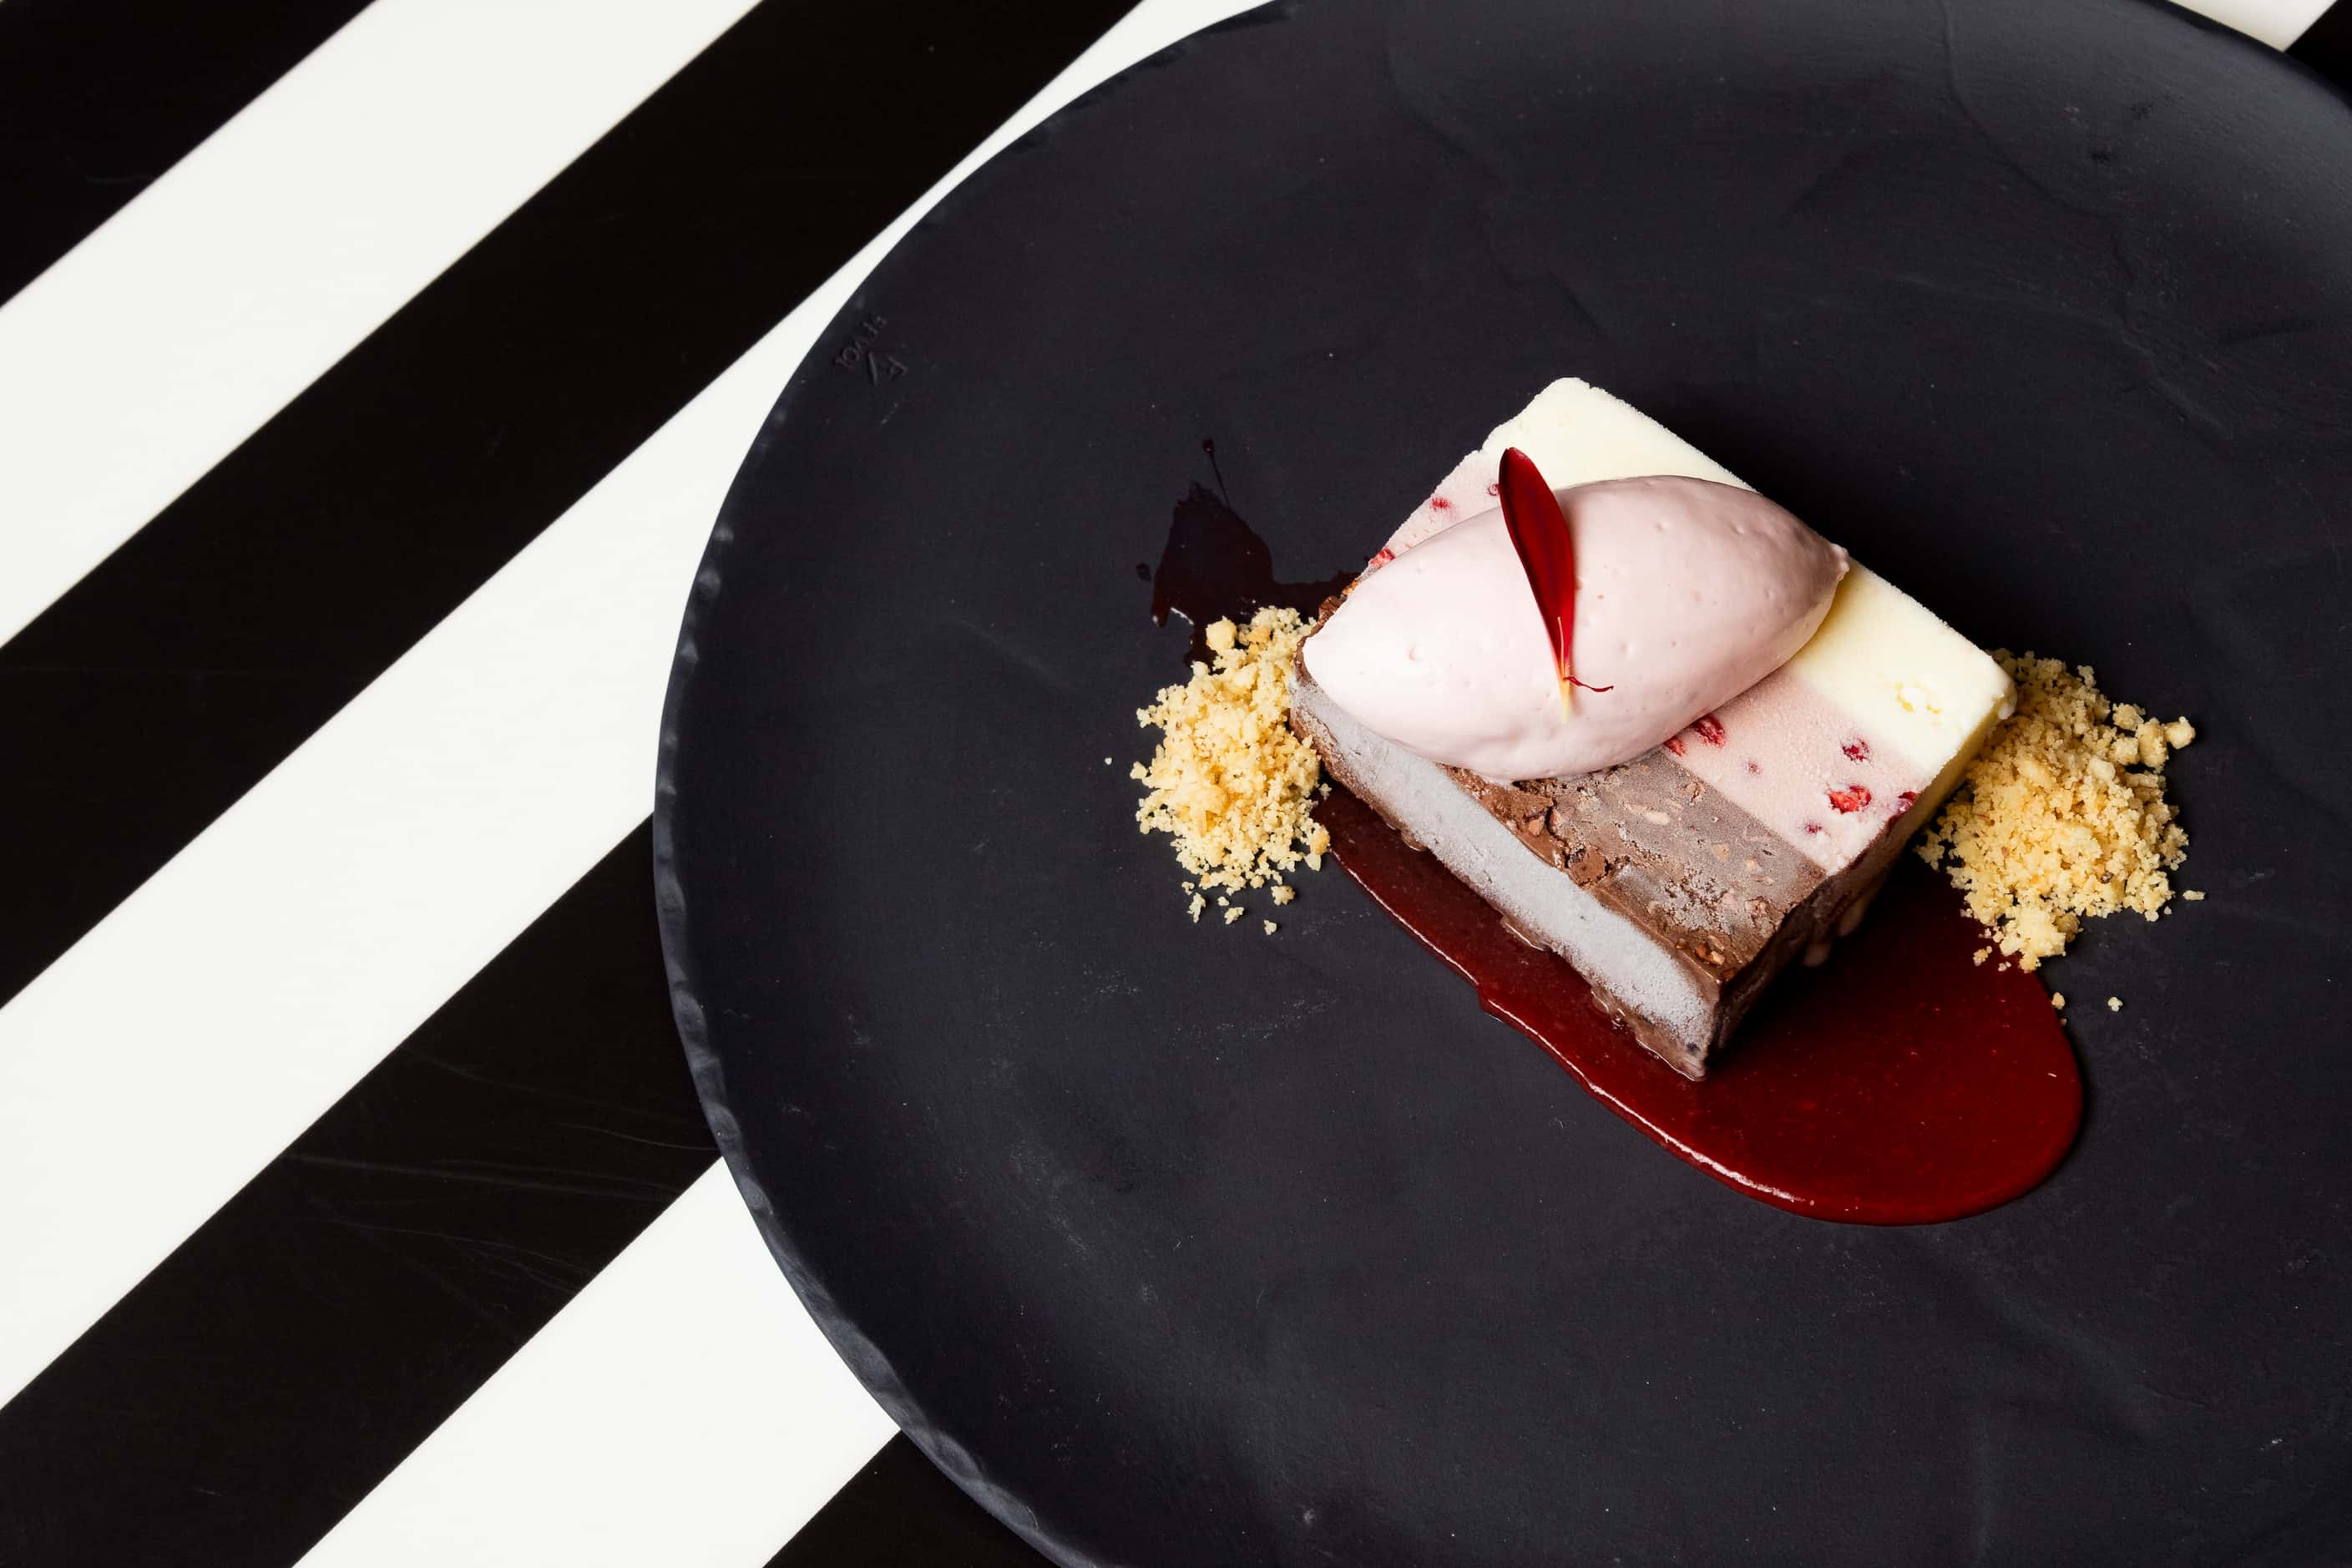 The Neapolitan Spumoni dessert at Knife Italian has layers of vanilla, chocolate and...